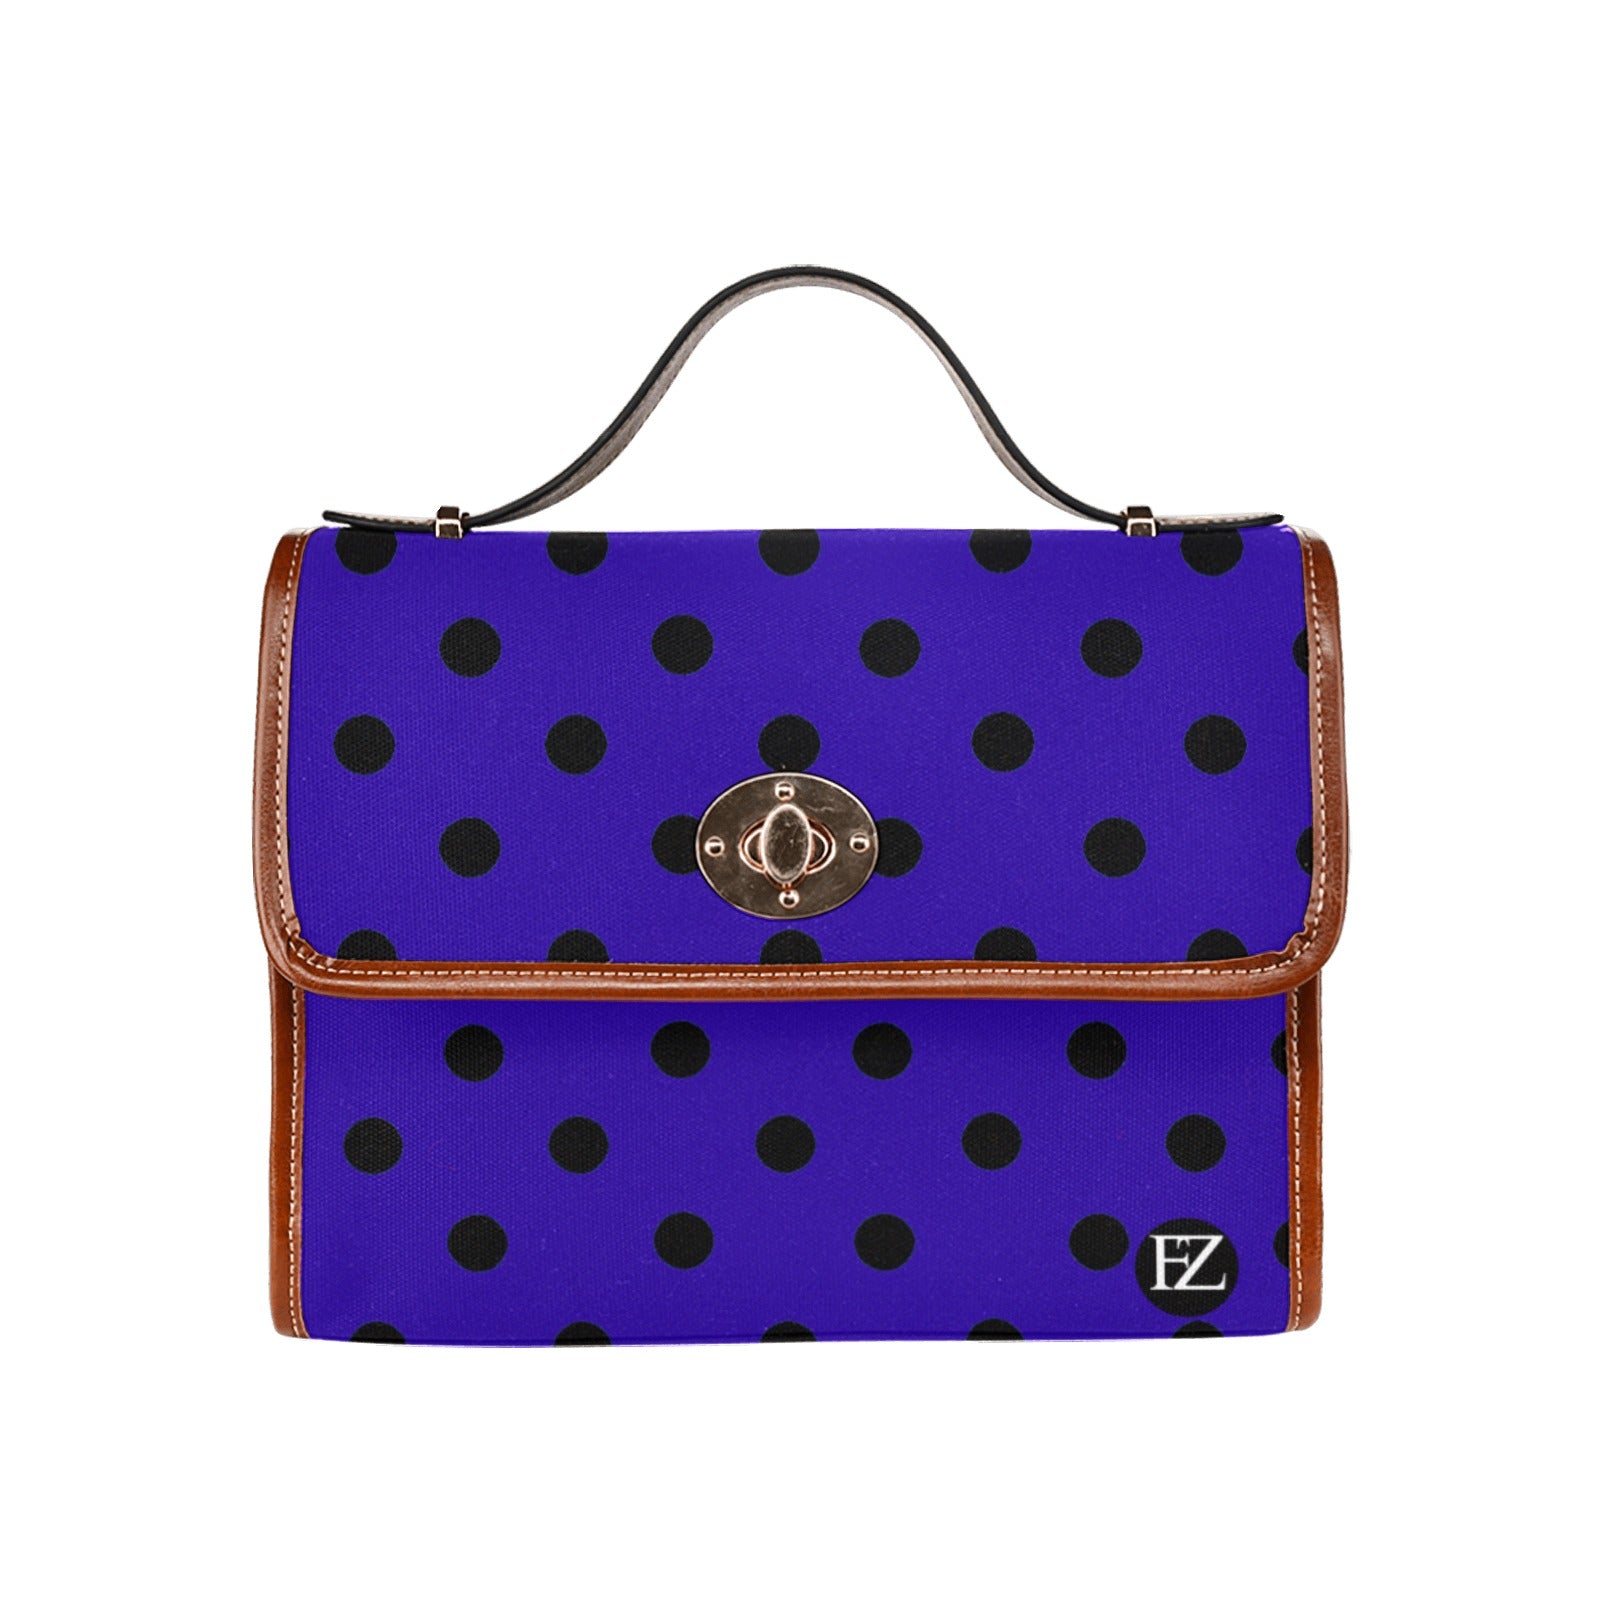 fz dot handbag one size / fz blue dot handbag all over print waterproof canvas bag(model1641)(brown strap)